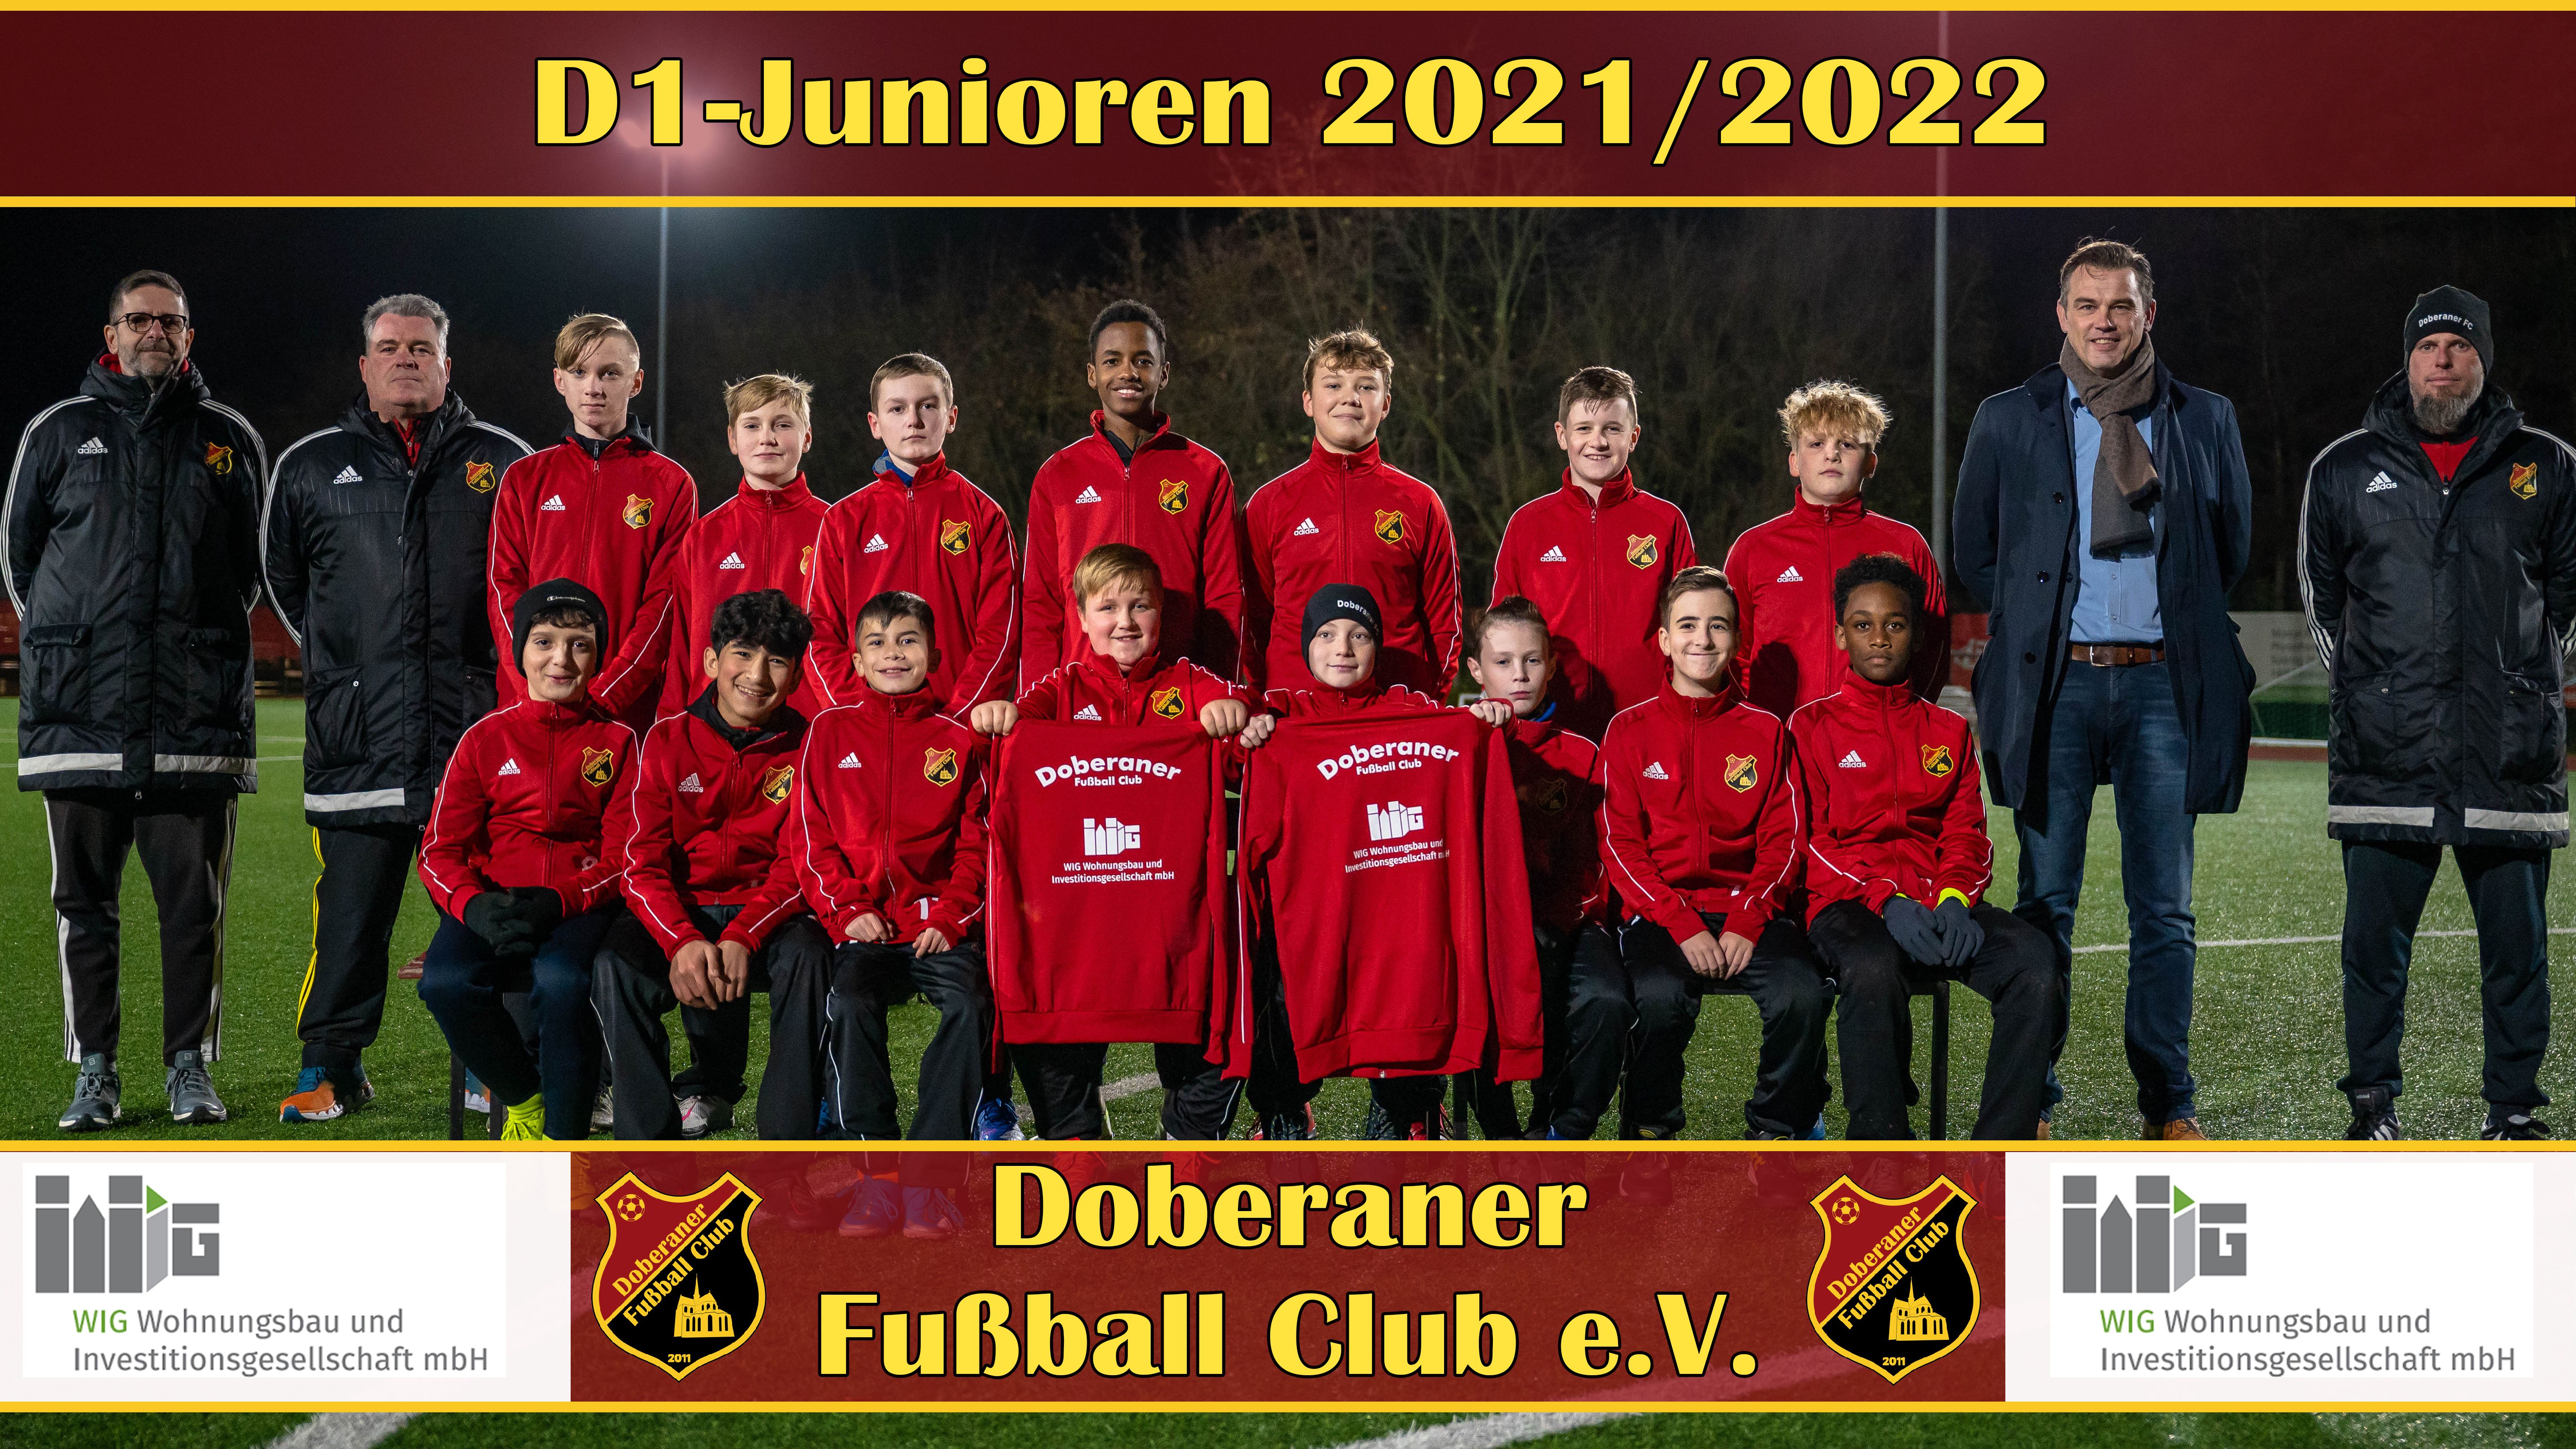 D1-Junioren 2021/2022